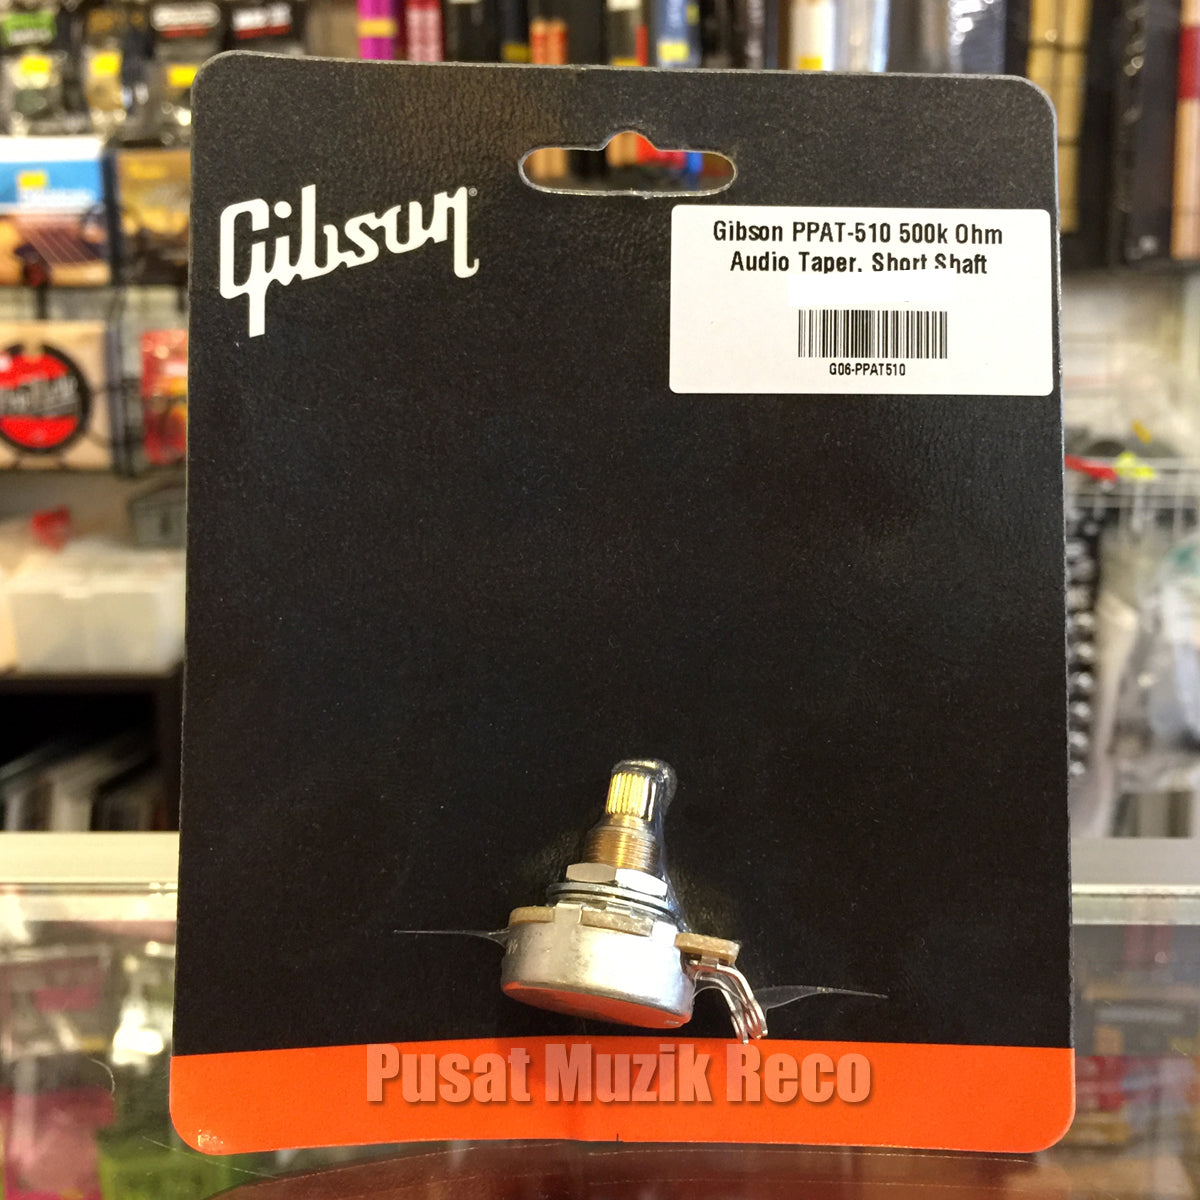 Gibson PPAT-510 Guitar Audio Taper Potentiometer 500K Short Shaft - Reco Music Malaysia